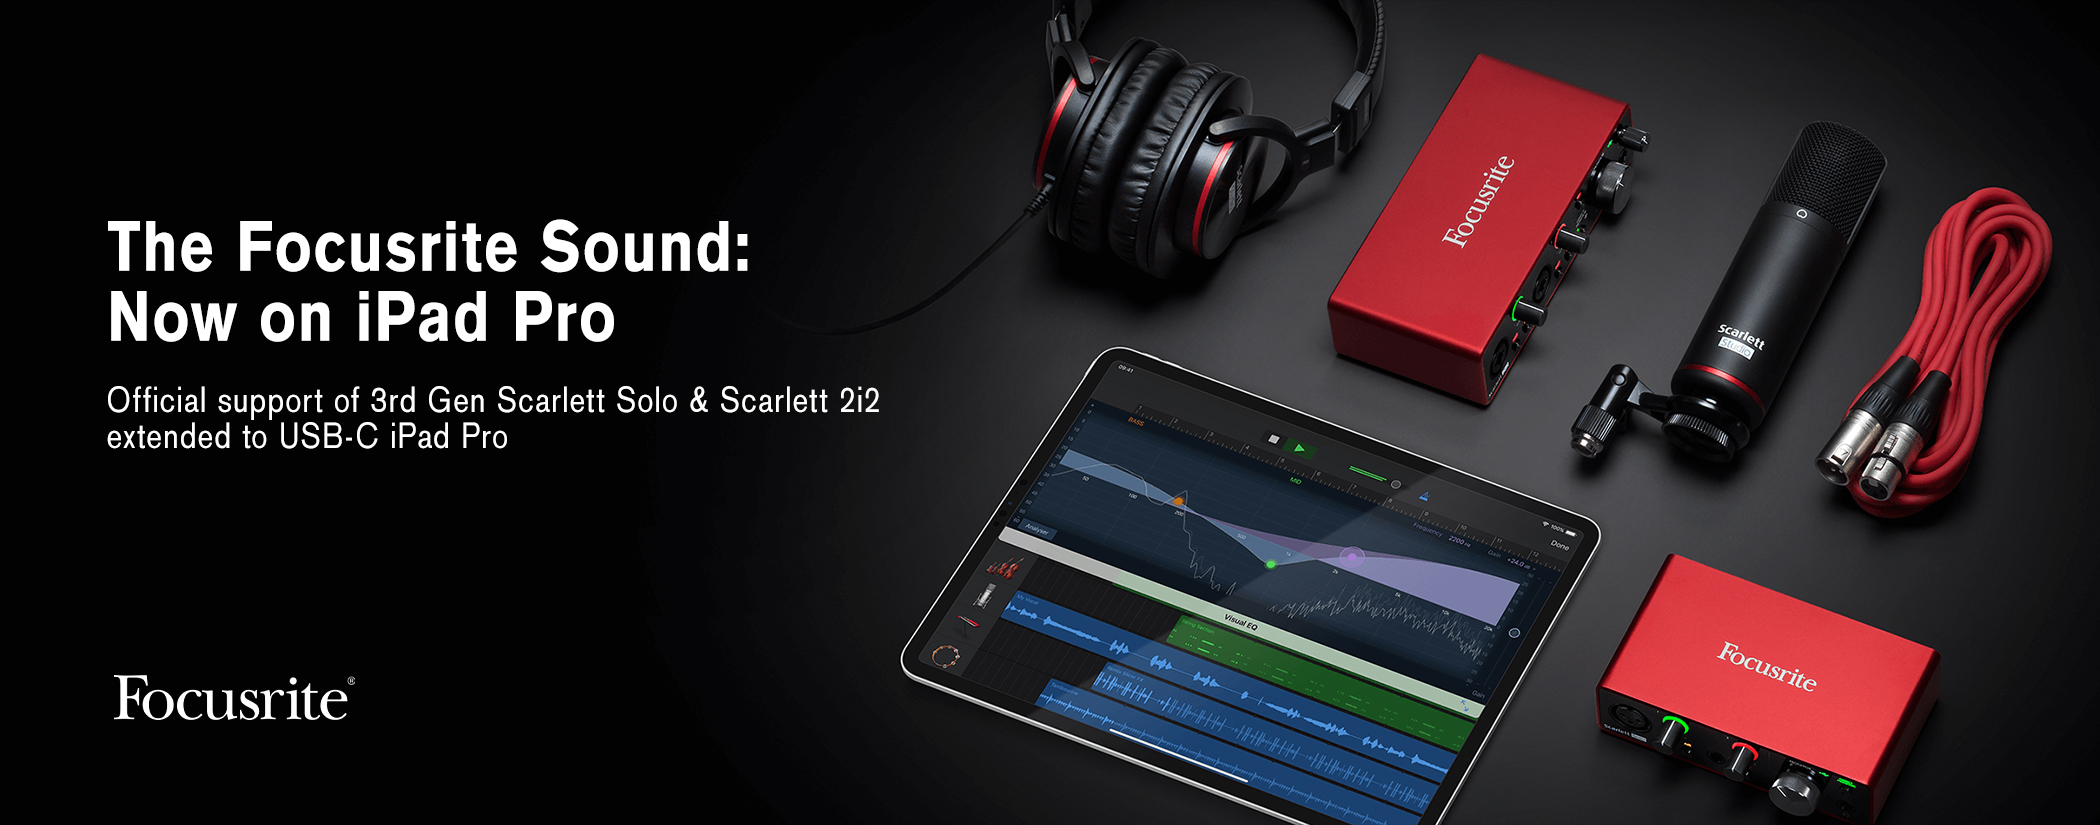 The Focusrite Sound: Now On iPad Pro